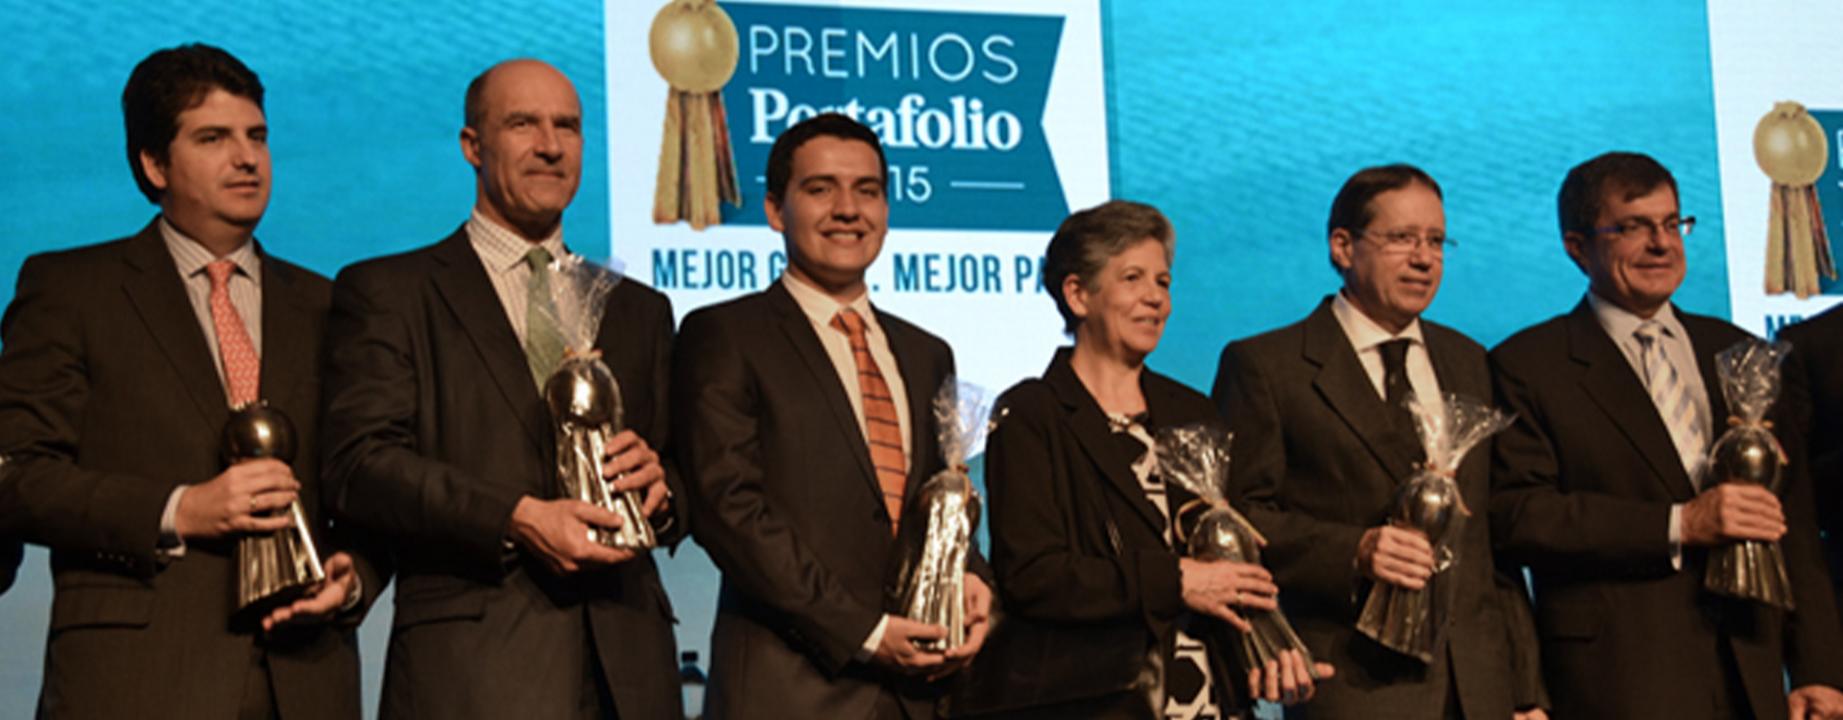 premios-portafolio-2015-ban